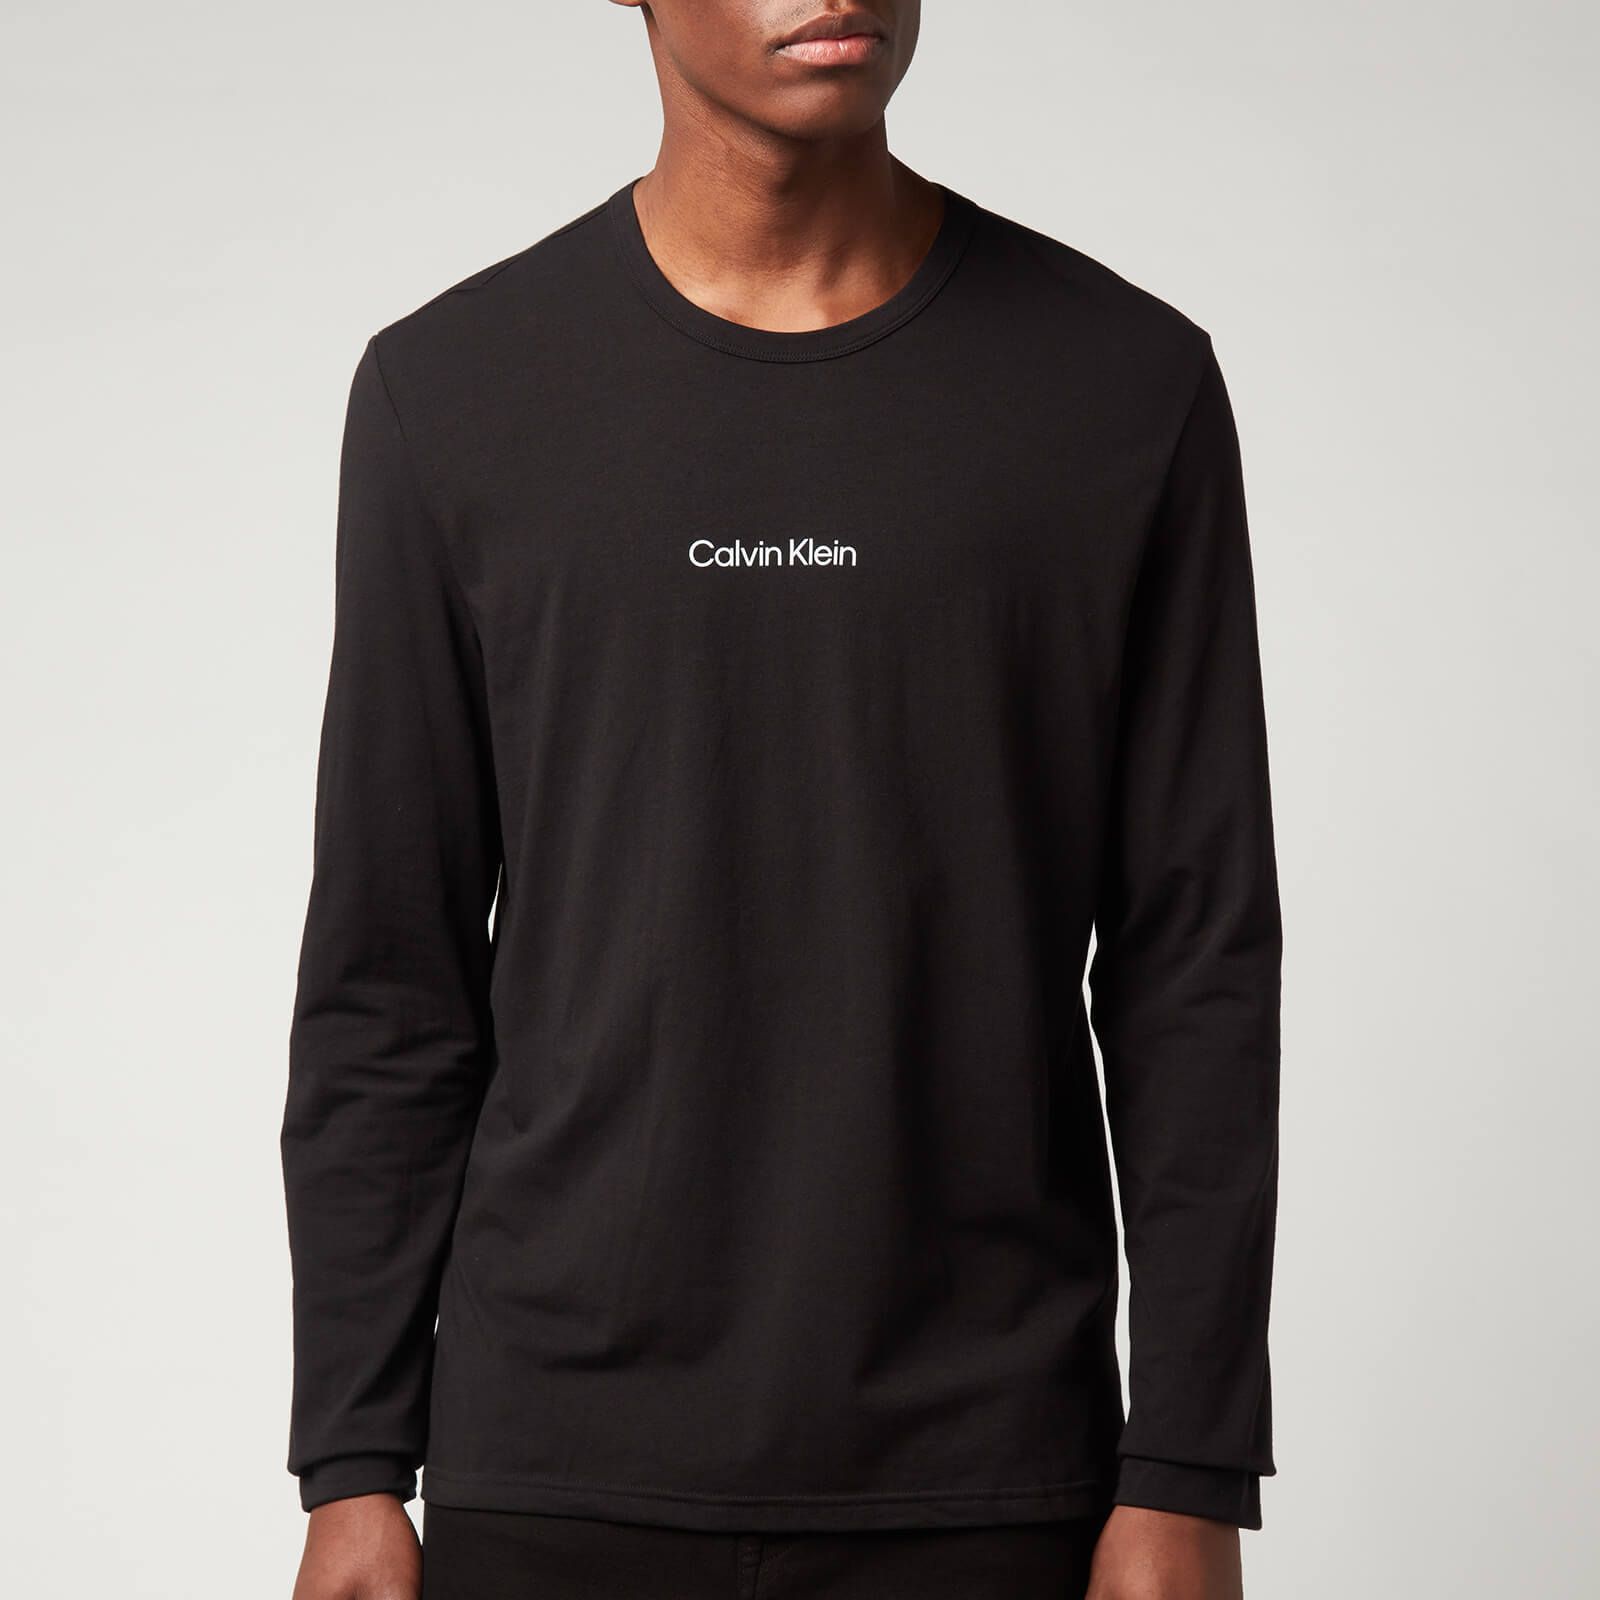 Calvin Klein Men's Long Sleeve Crew Neck Top - Black - S